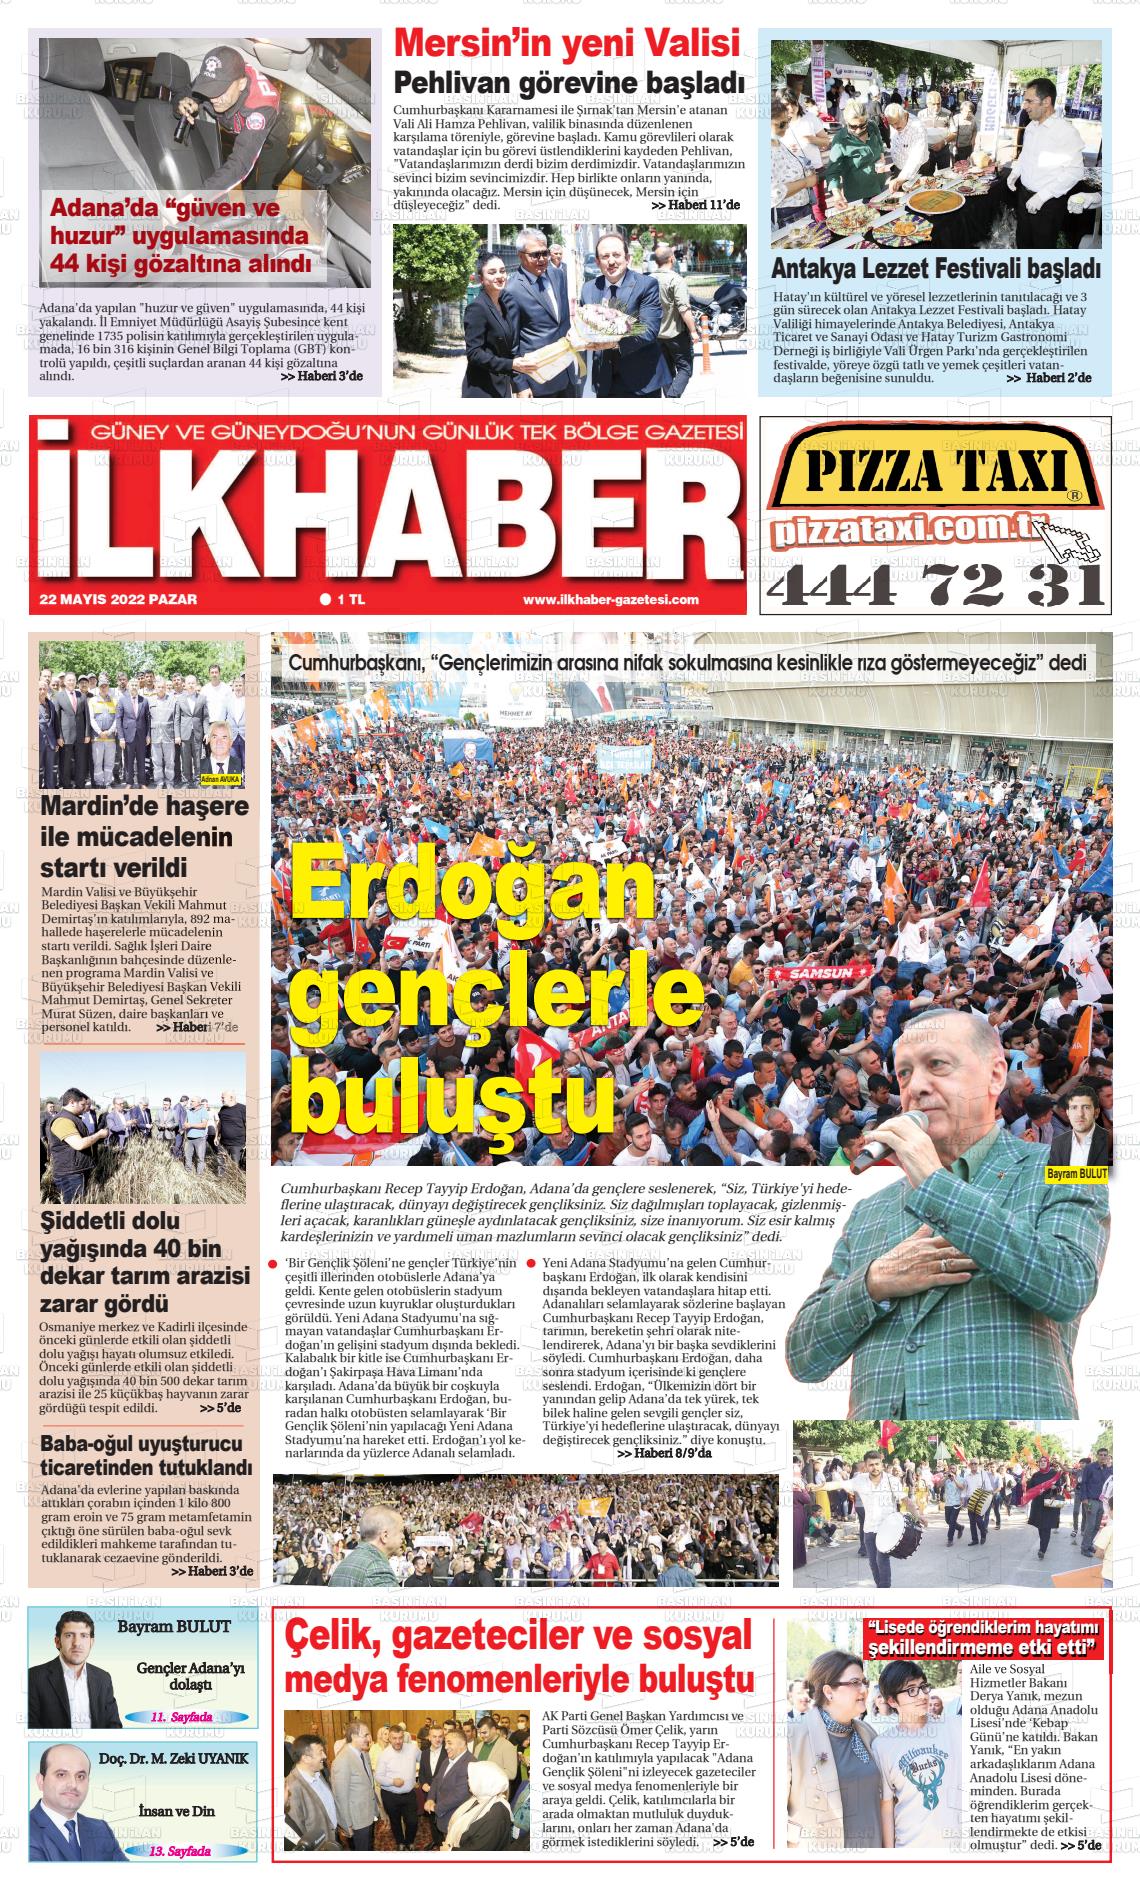 22 Mayıs 2022 İlk Haber Gazete Manşeti